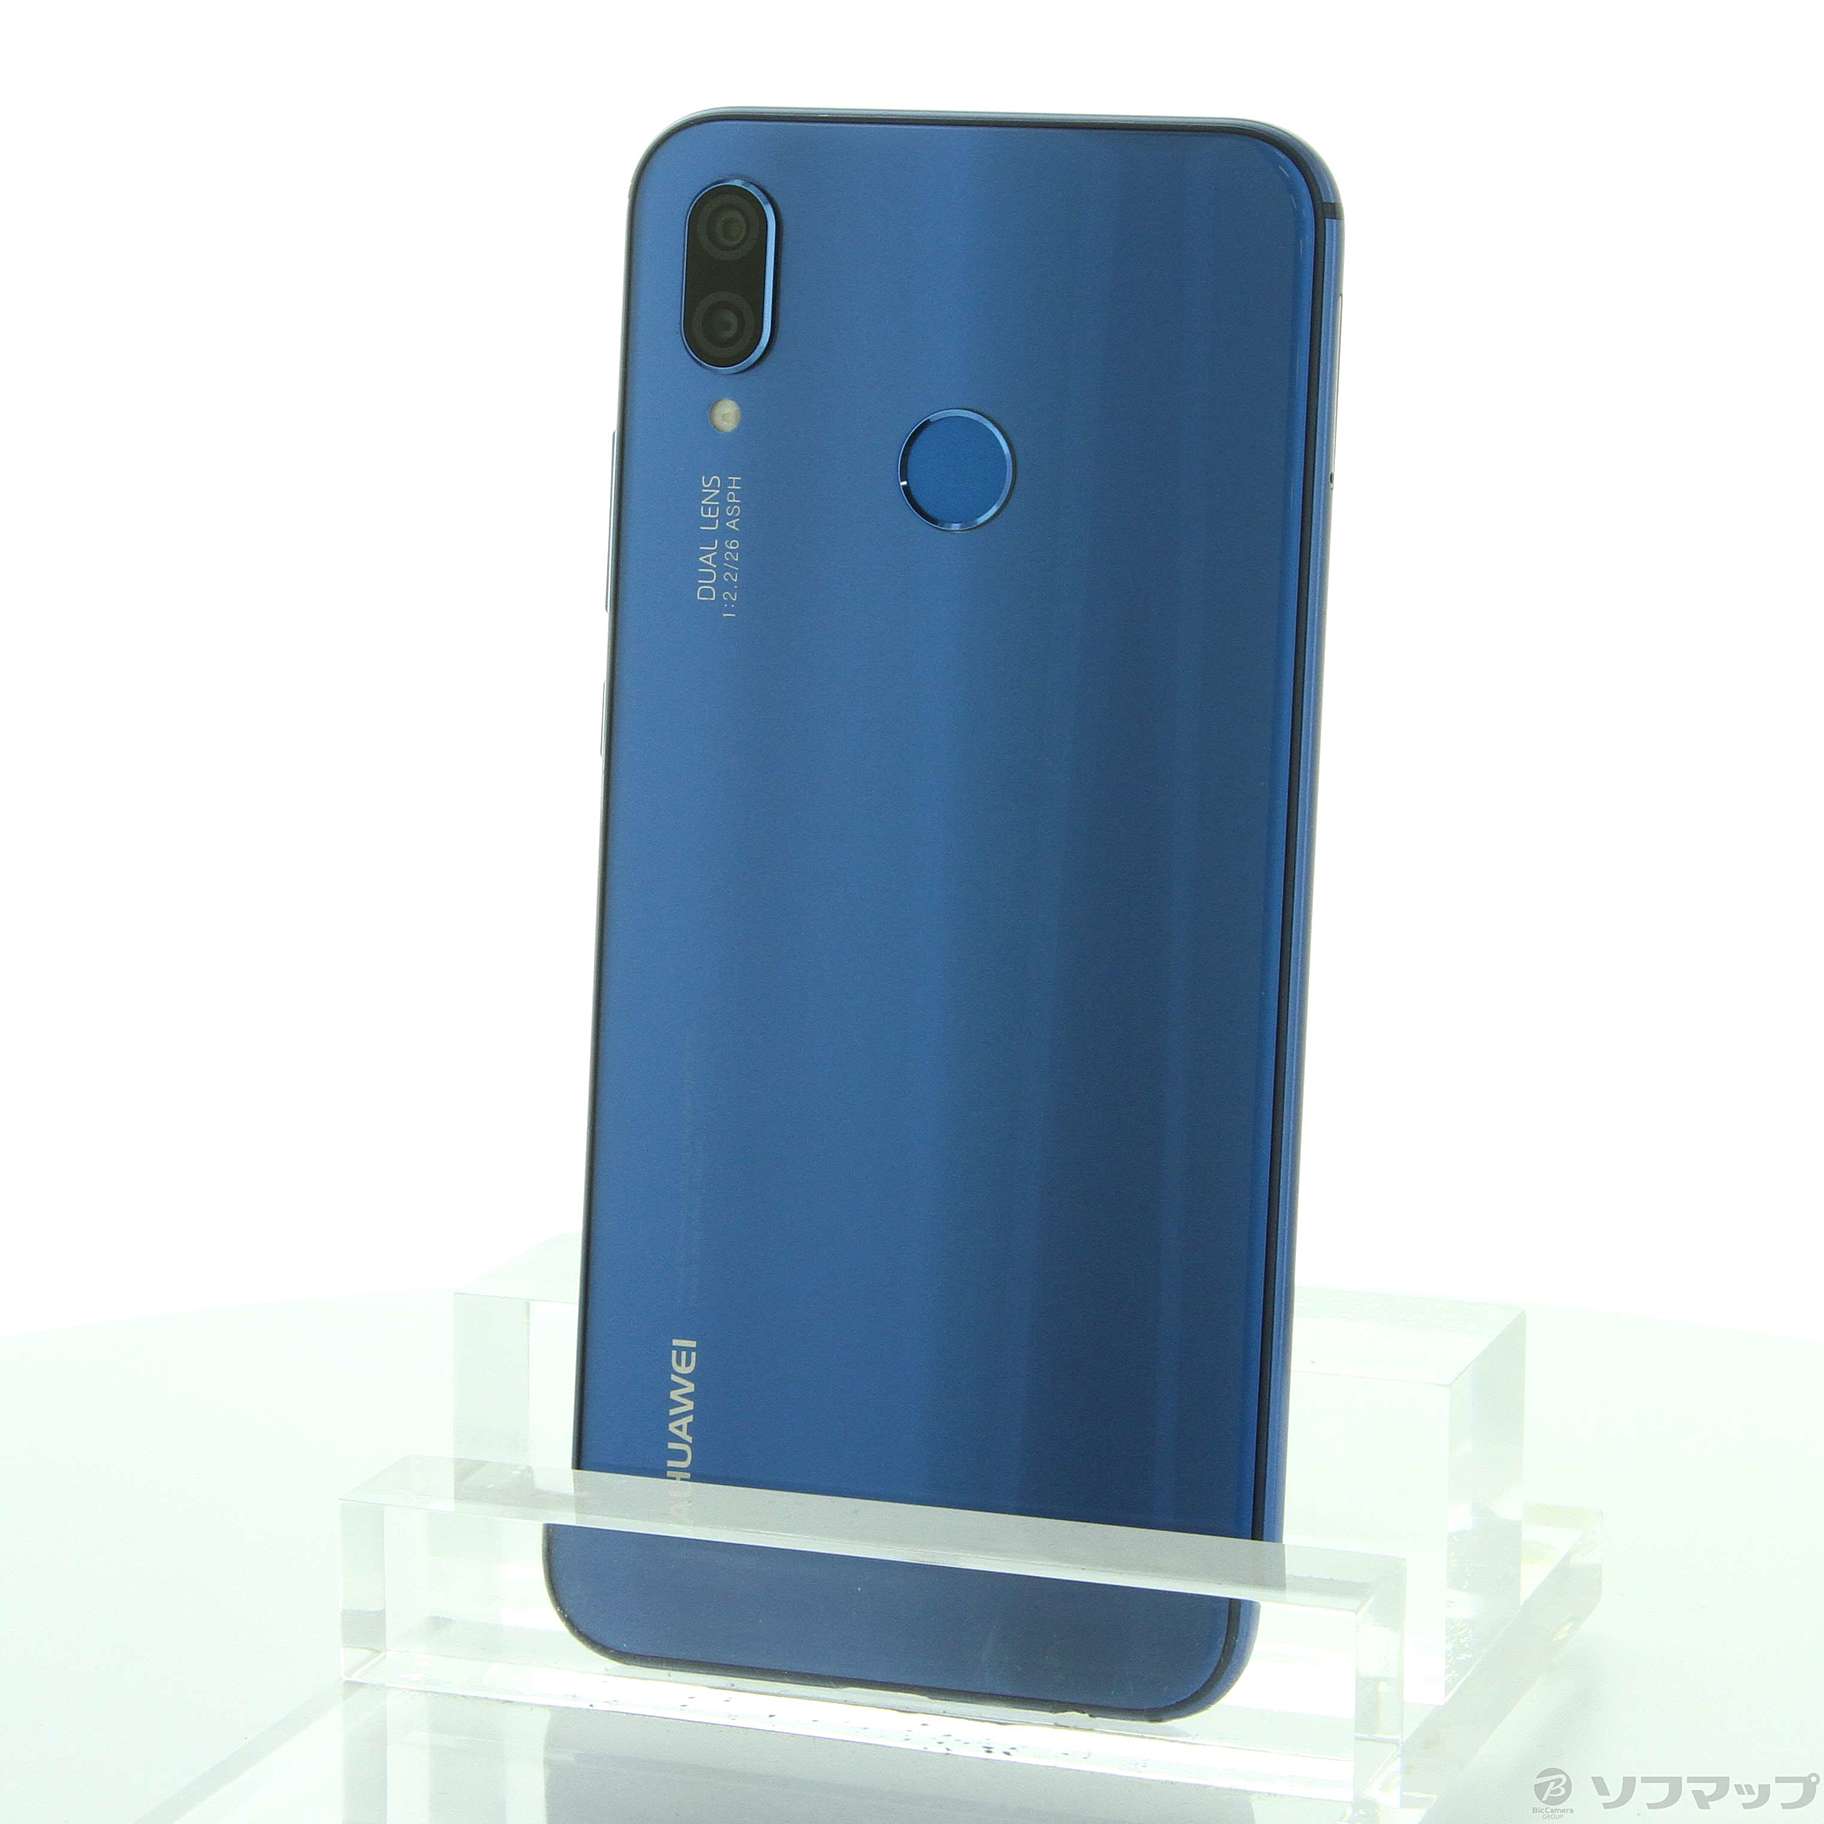 Huawei P20 lite 32GB Blue 《新品》simフリー - www.sorbillomenu.com